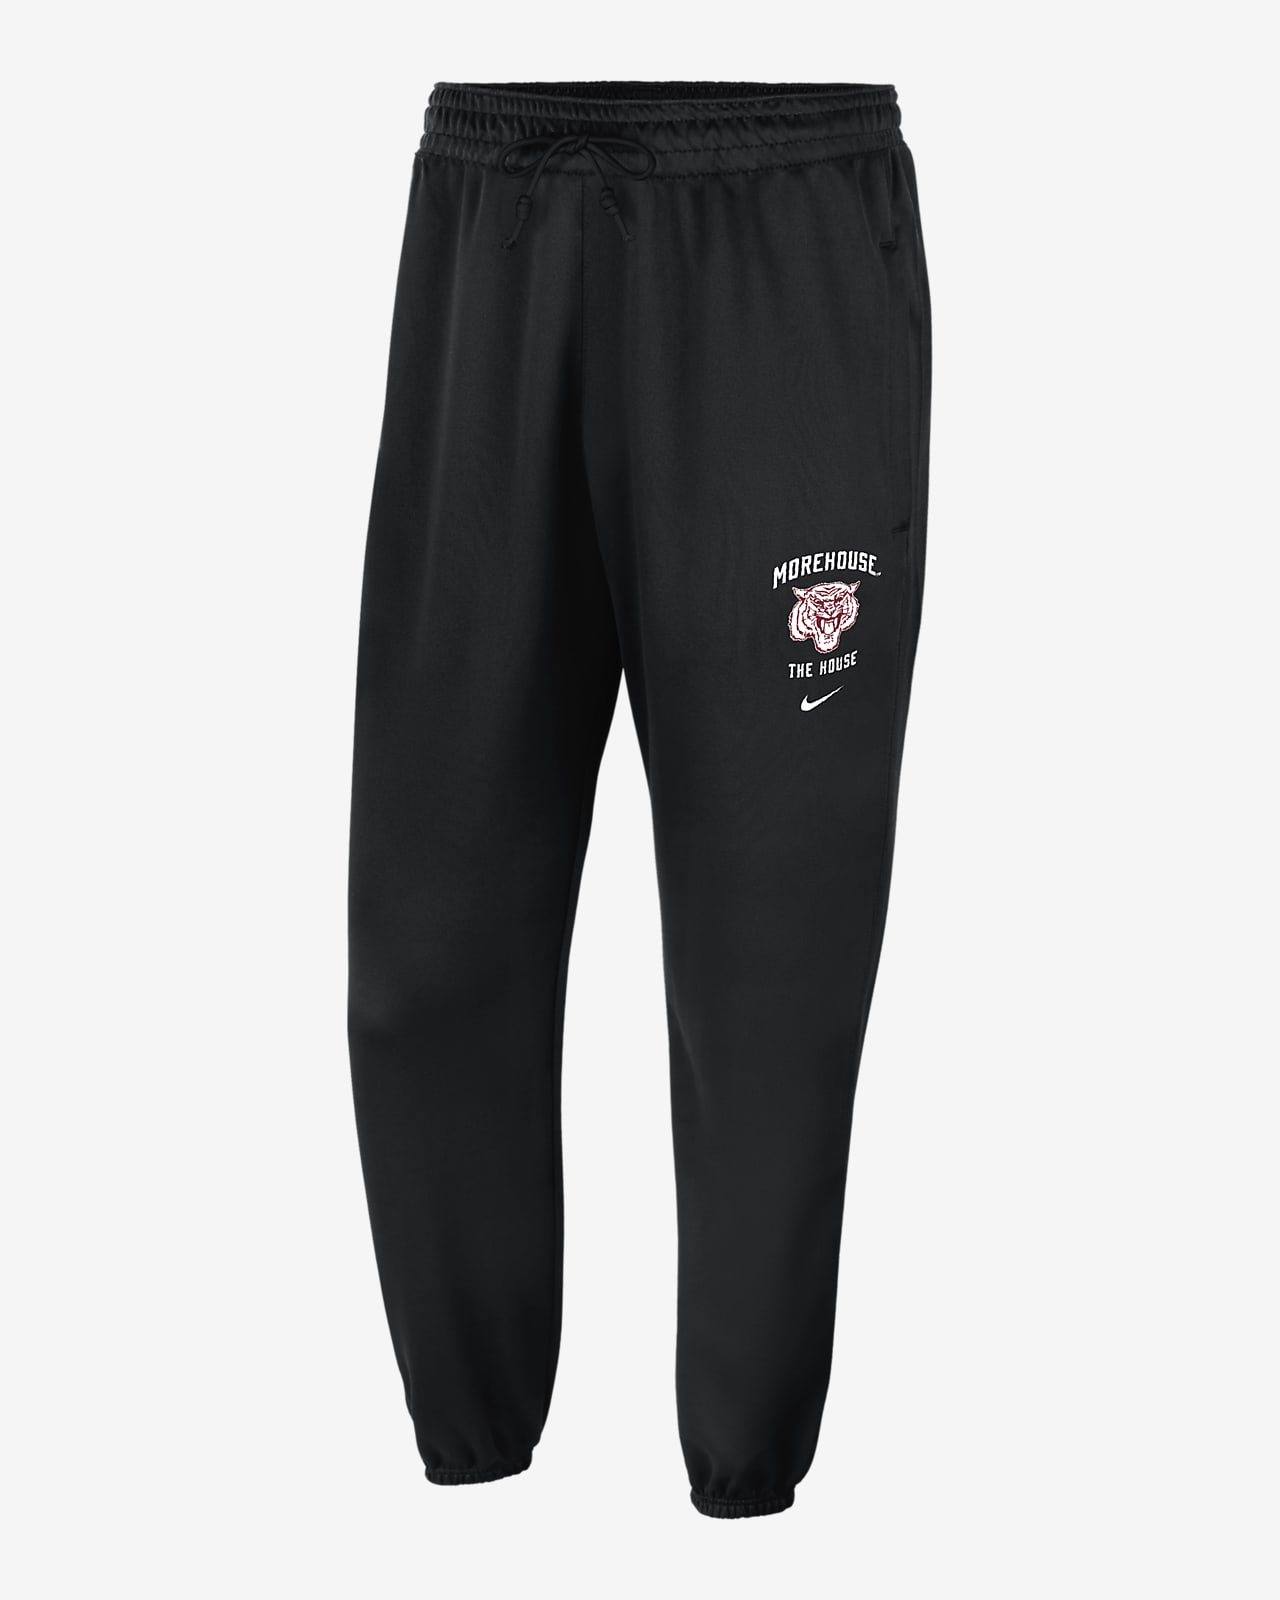 Morehouse Standard Issue Men's Nike College Fleece Joggers